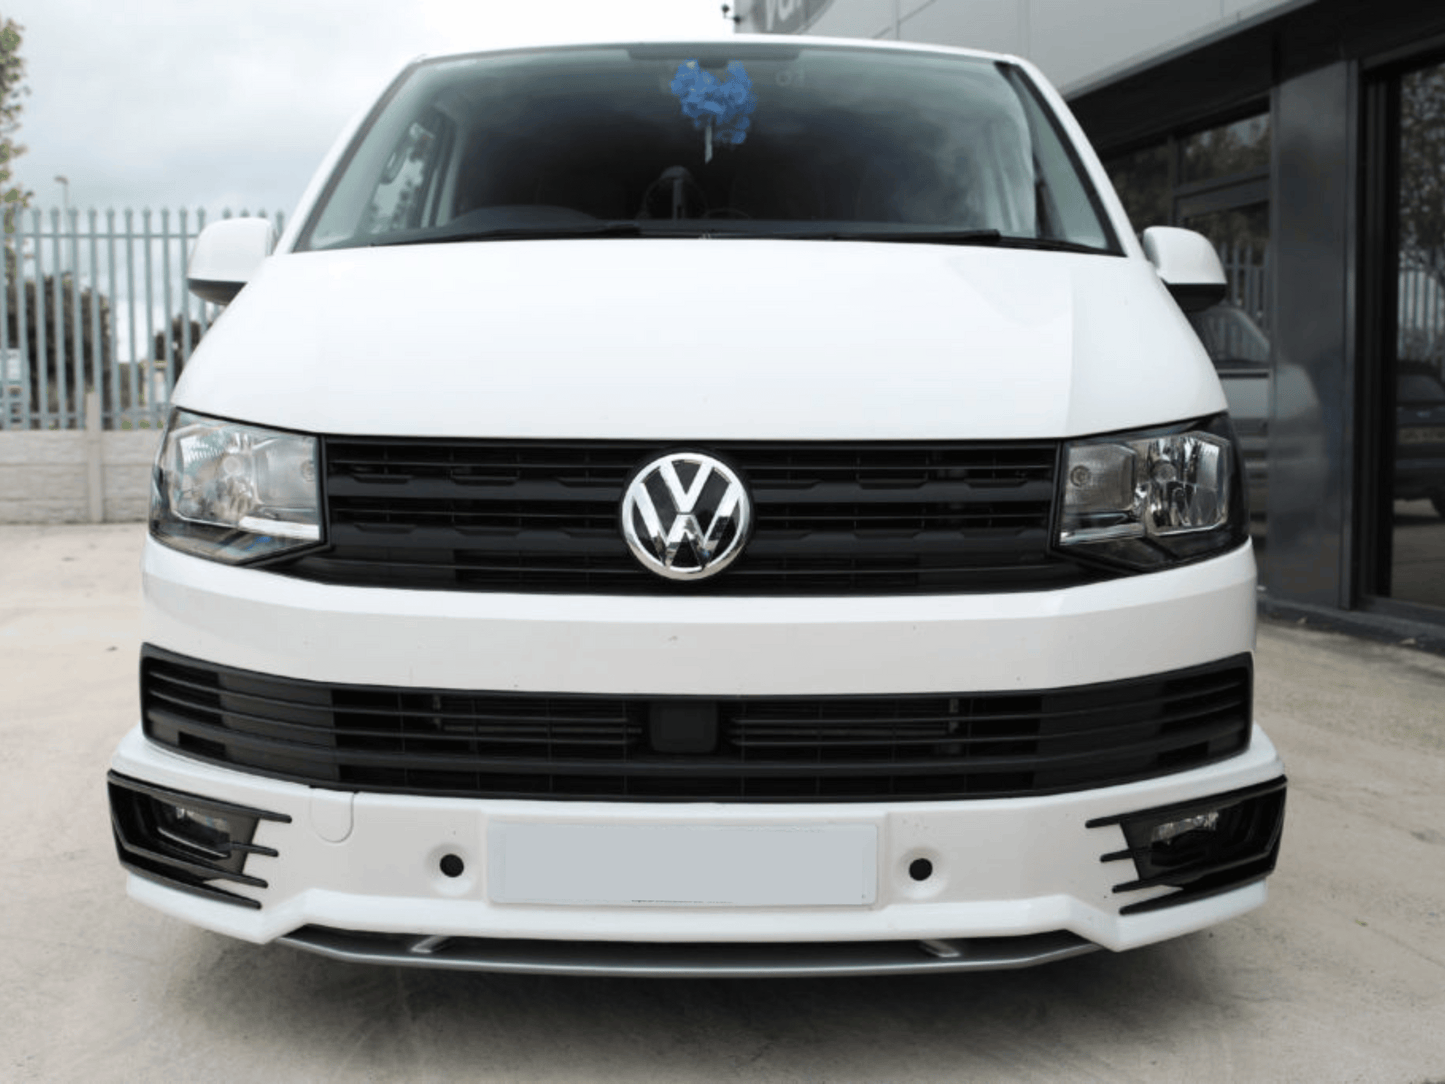 VW Transporter T6 R-Line grille-afwerking vooraan - glanzend zwart